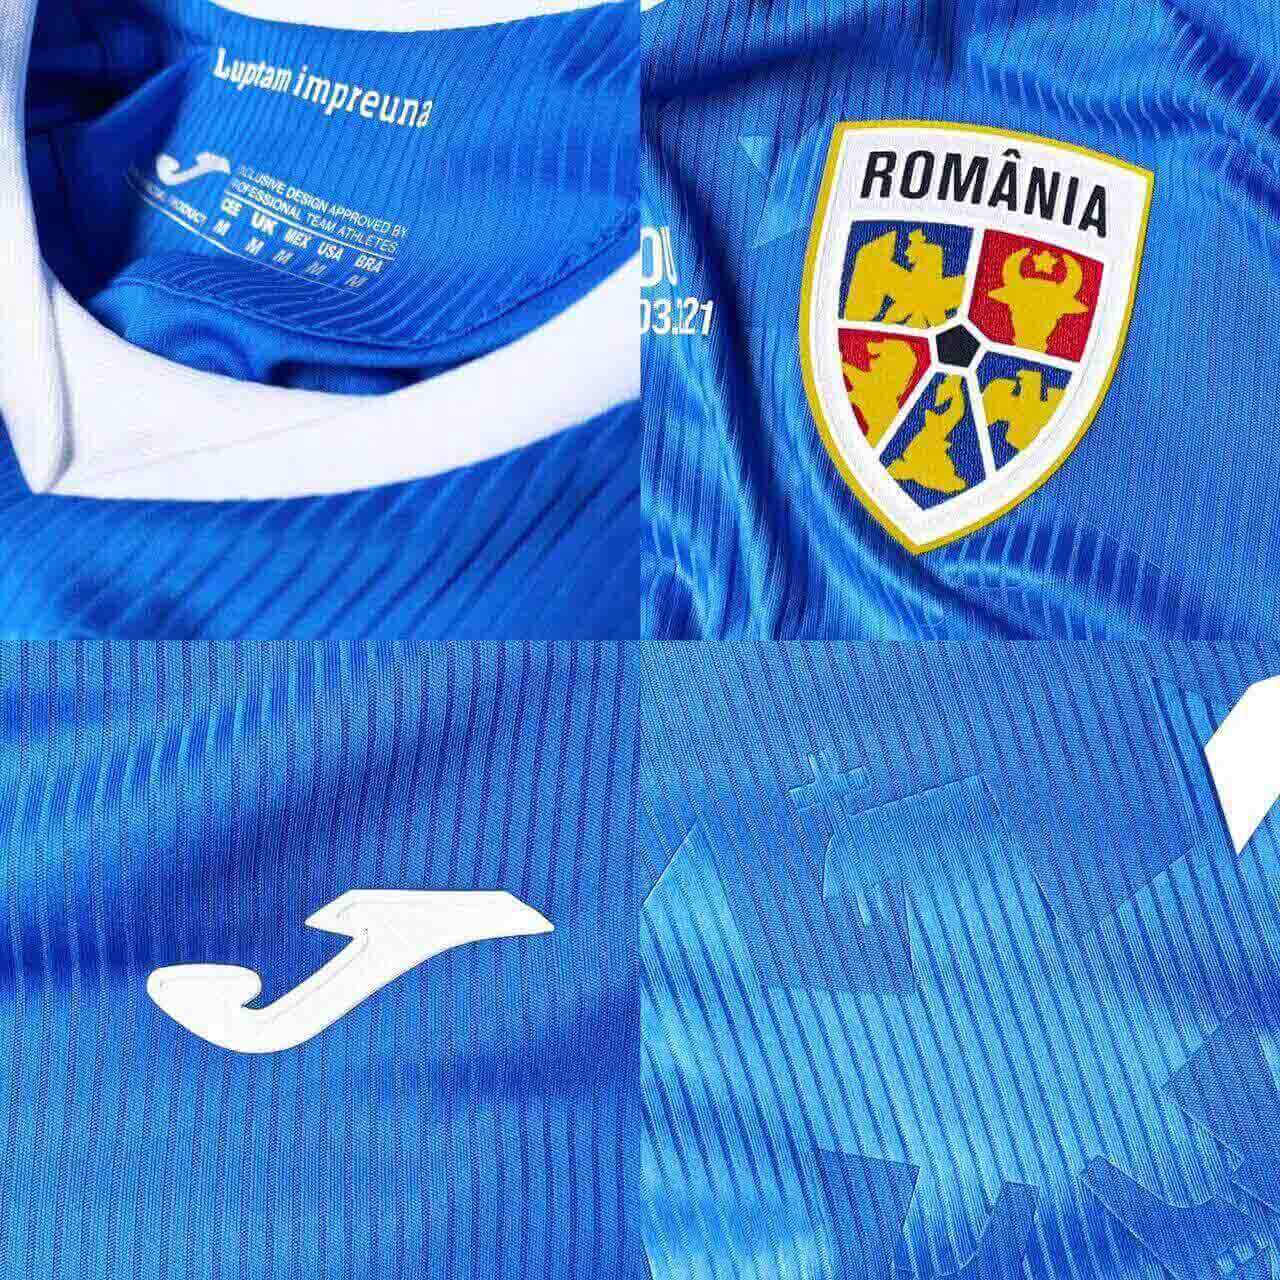 2021 Romania jersey